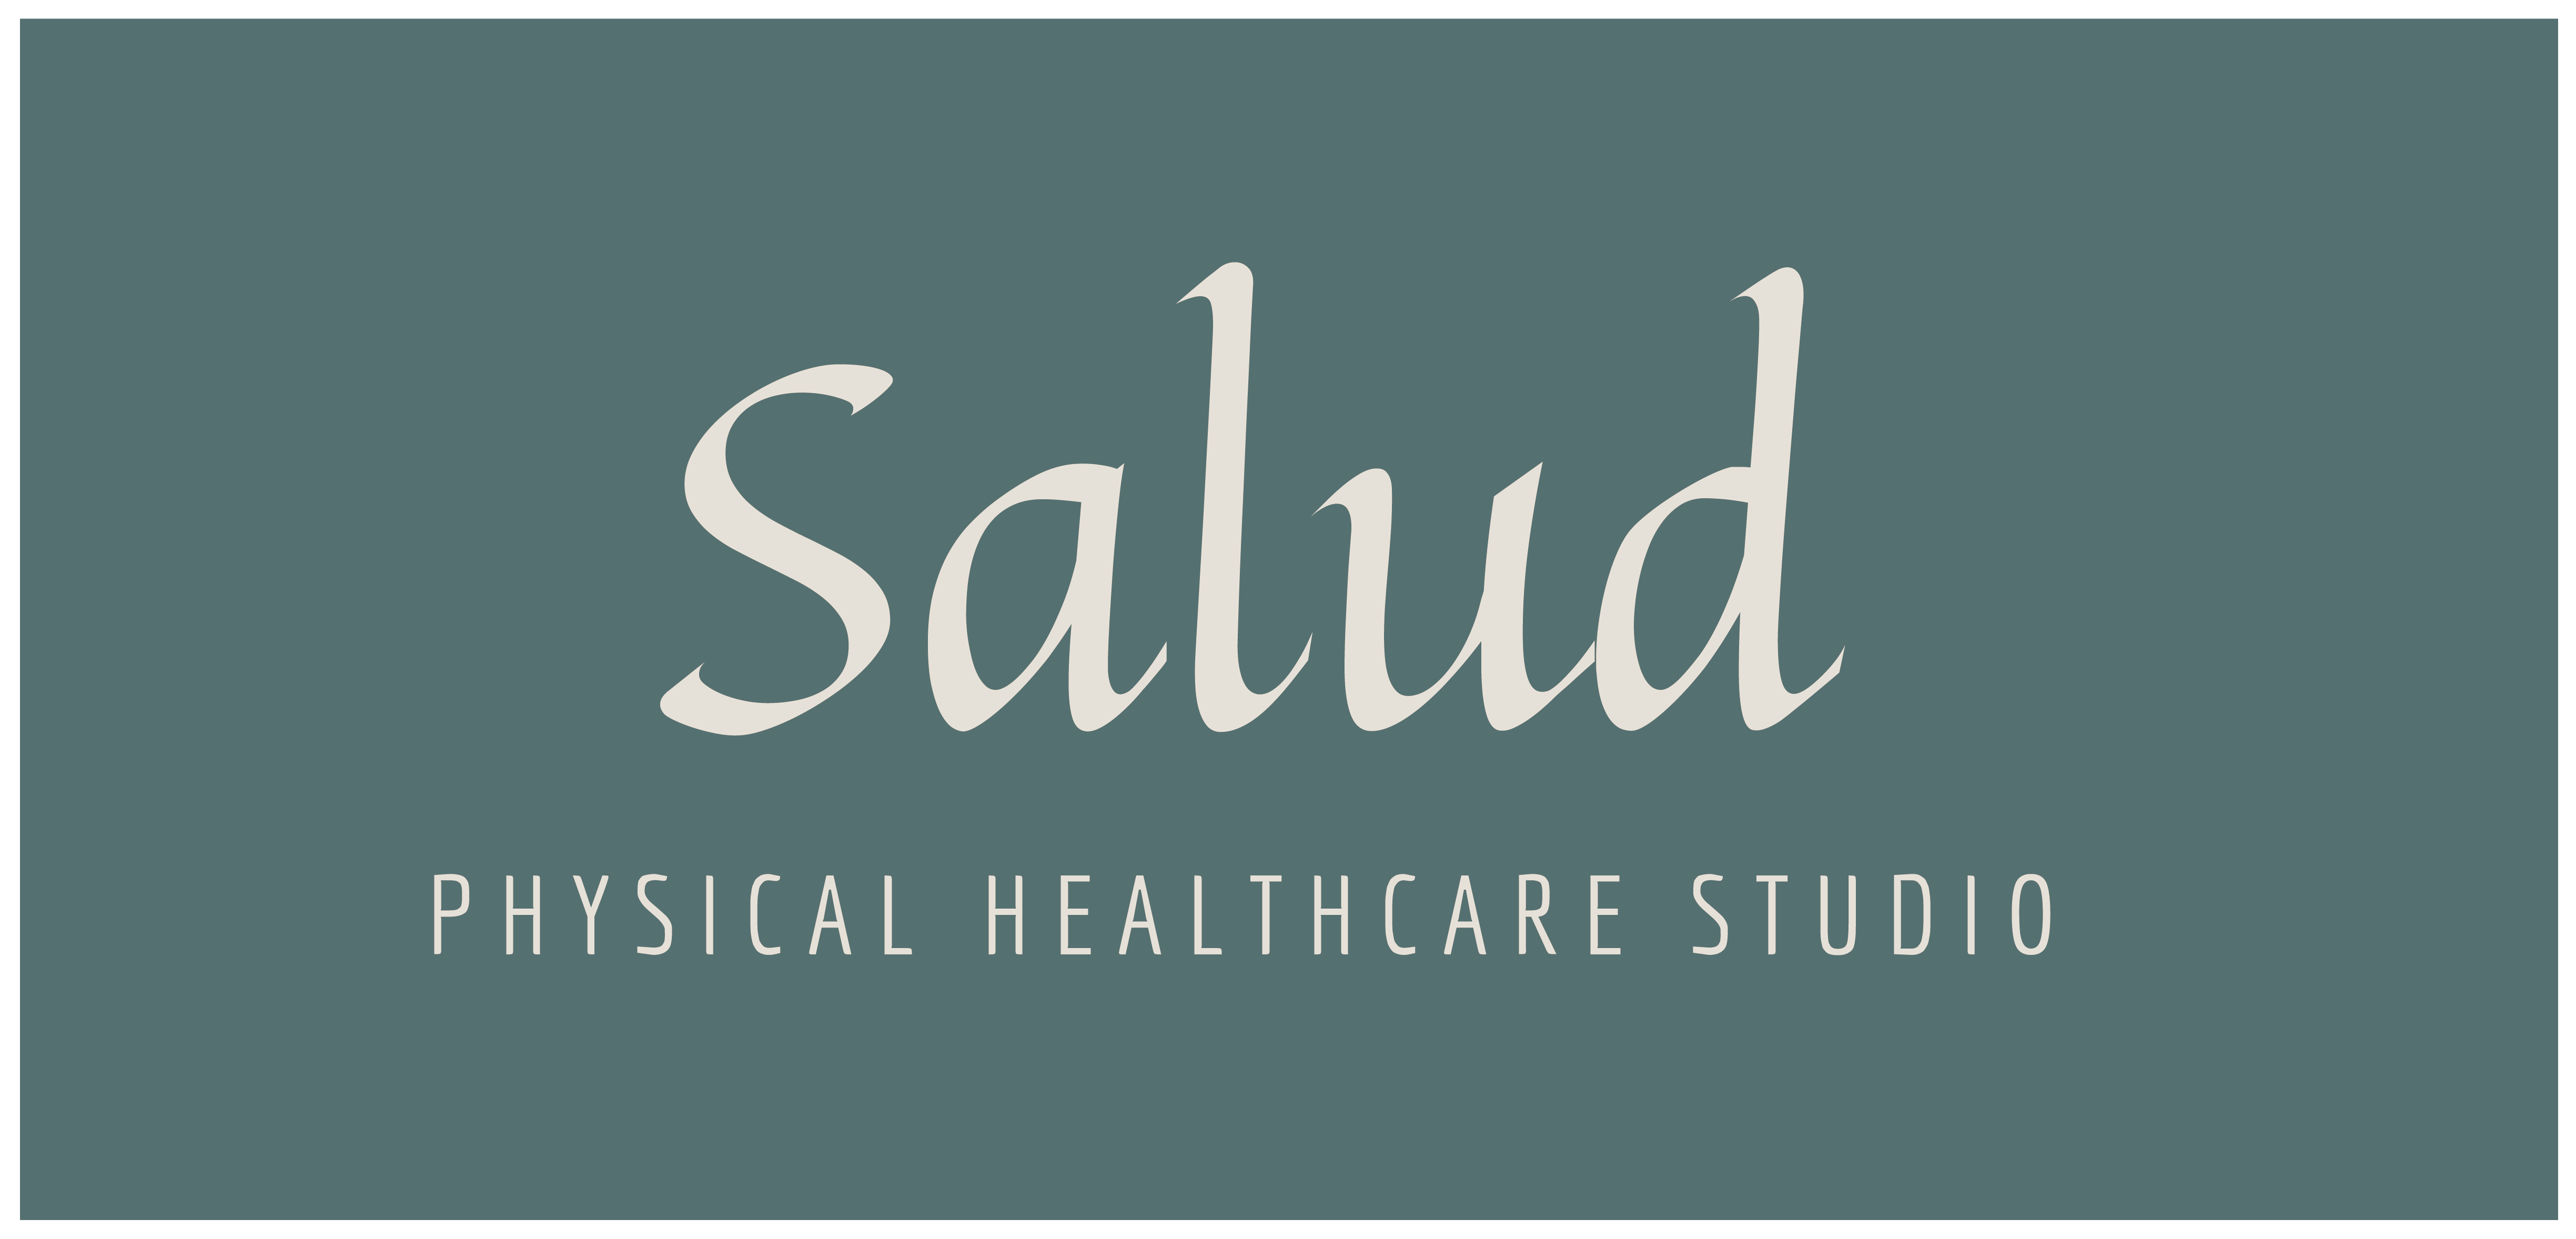 Salud physical healthcare studio